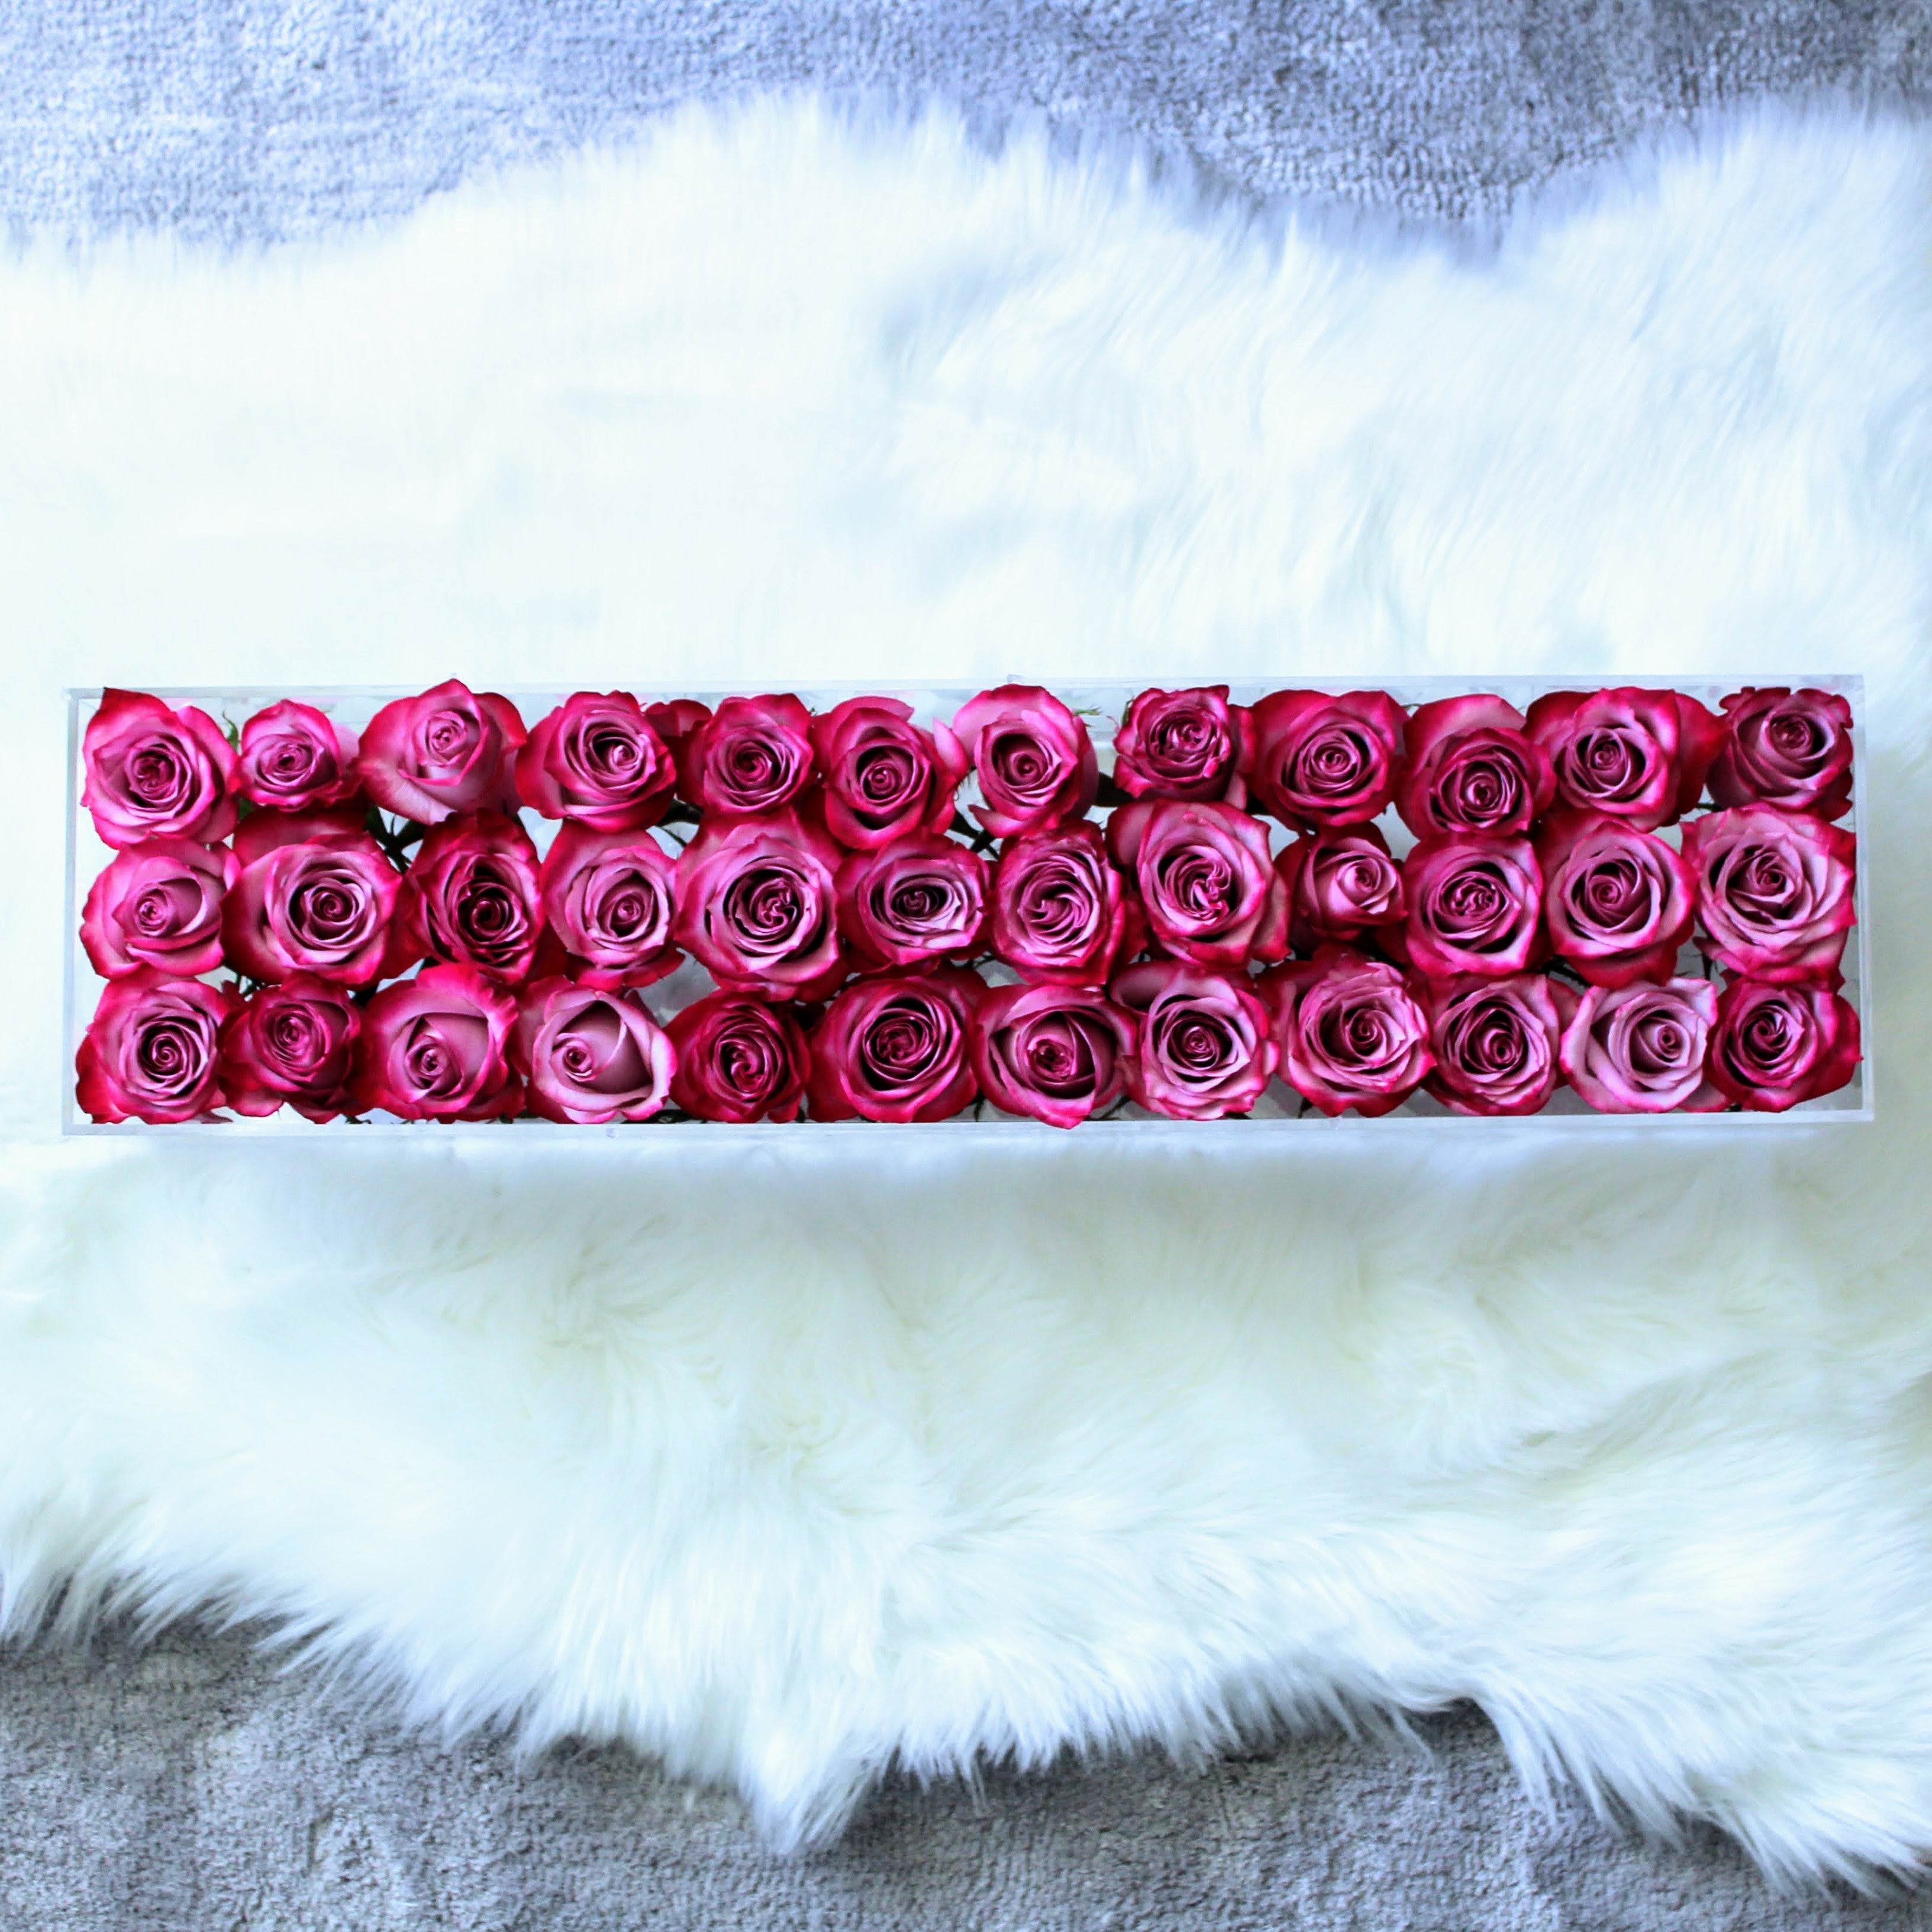 39 Fresh-Cut Rose Bouquet in Luxurious Centerpiece